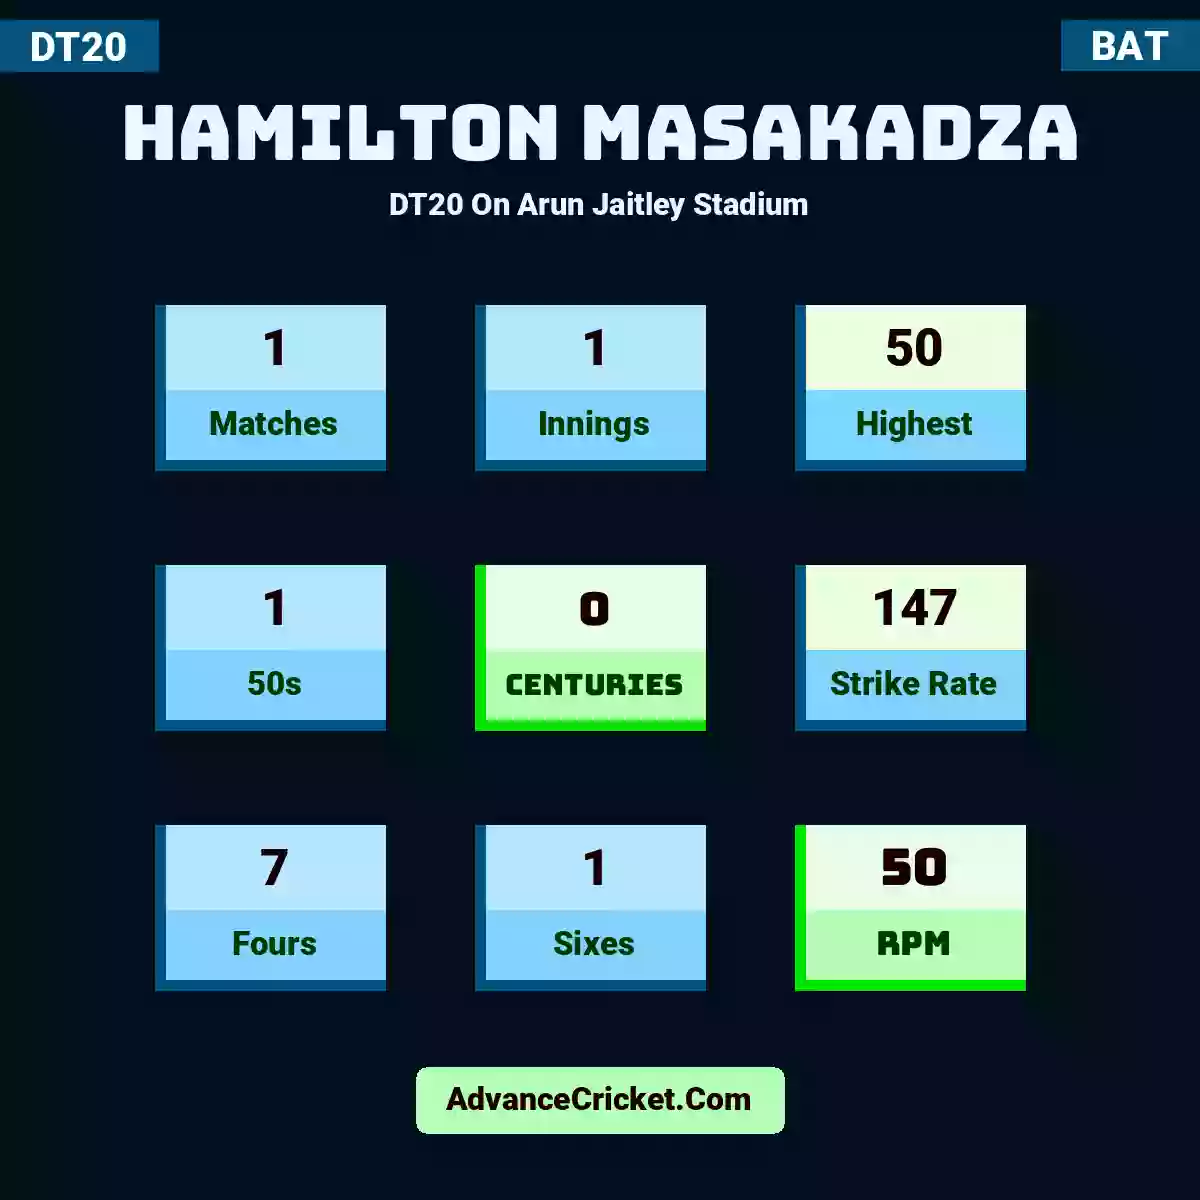 Hamilton Masakadza DT20  On Arun Jaitley Stadium, Hamilton Masakadza played 1 matches, scored 50 runs as highest, 1 half-centuries, and 0 centuries, with a strike rate of 147. H.Masakadza hit 7 fours and 1 sixes, with an RPM of 50.